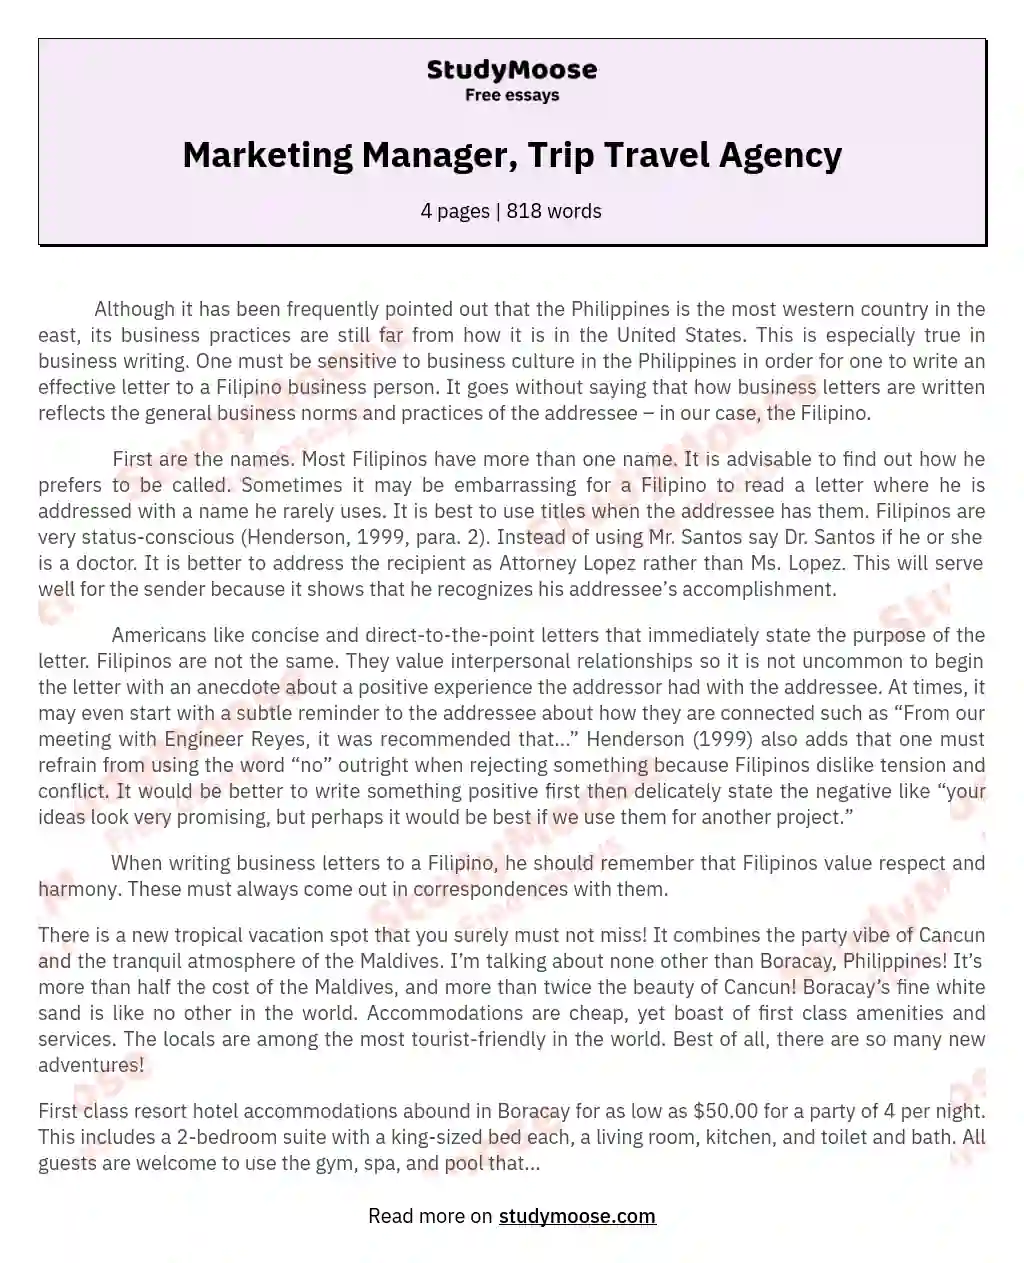 Marketing Manager, Trip Travel Agency essay